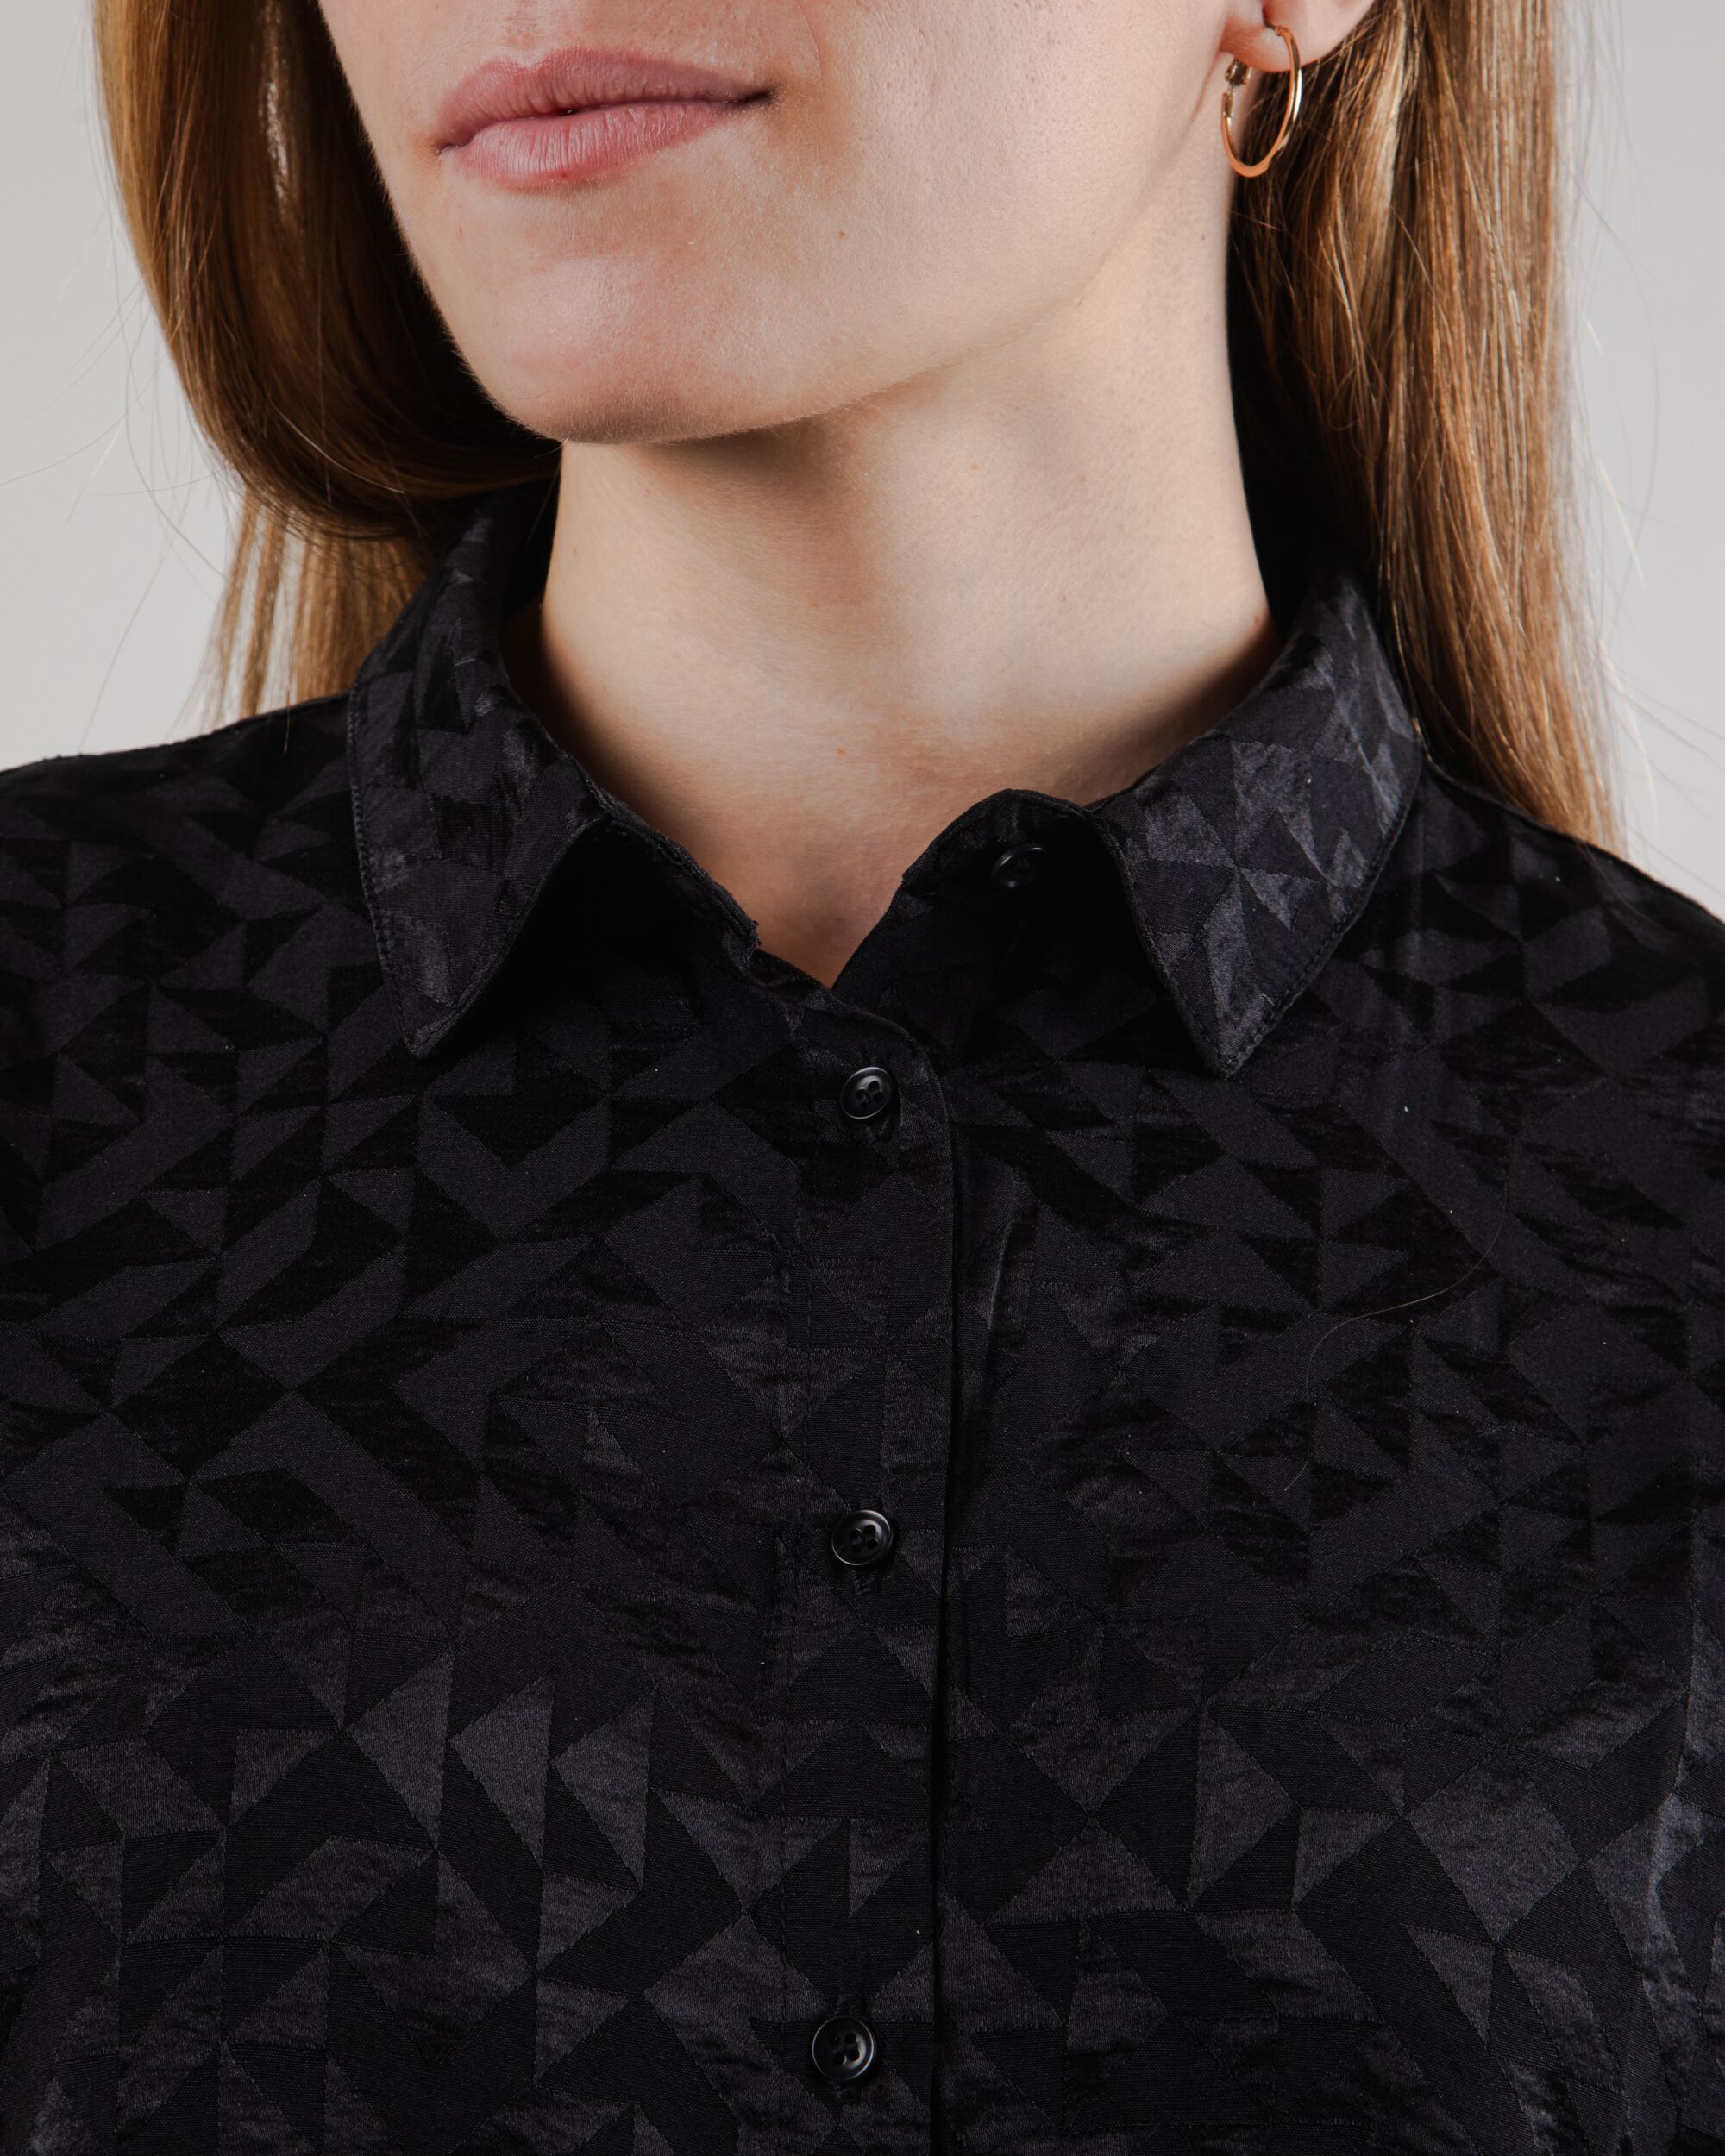 Jacquard batwing sleeve blouse in black from Brava Fabrics